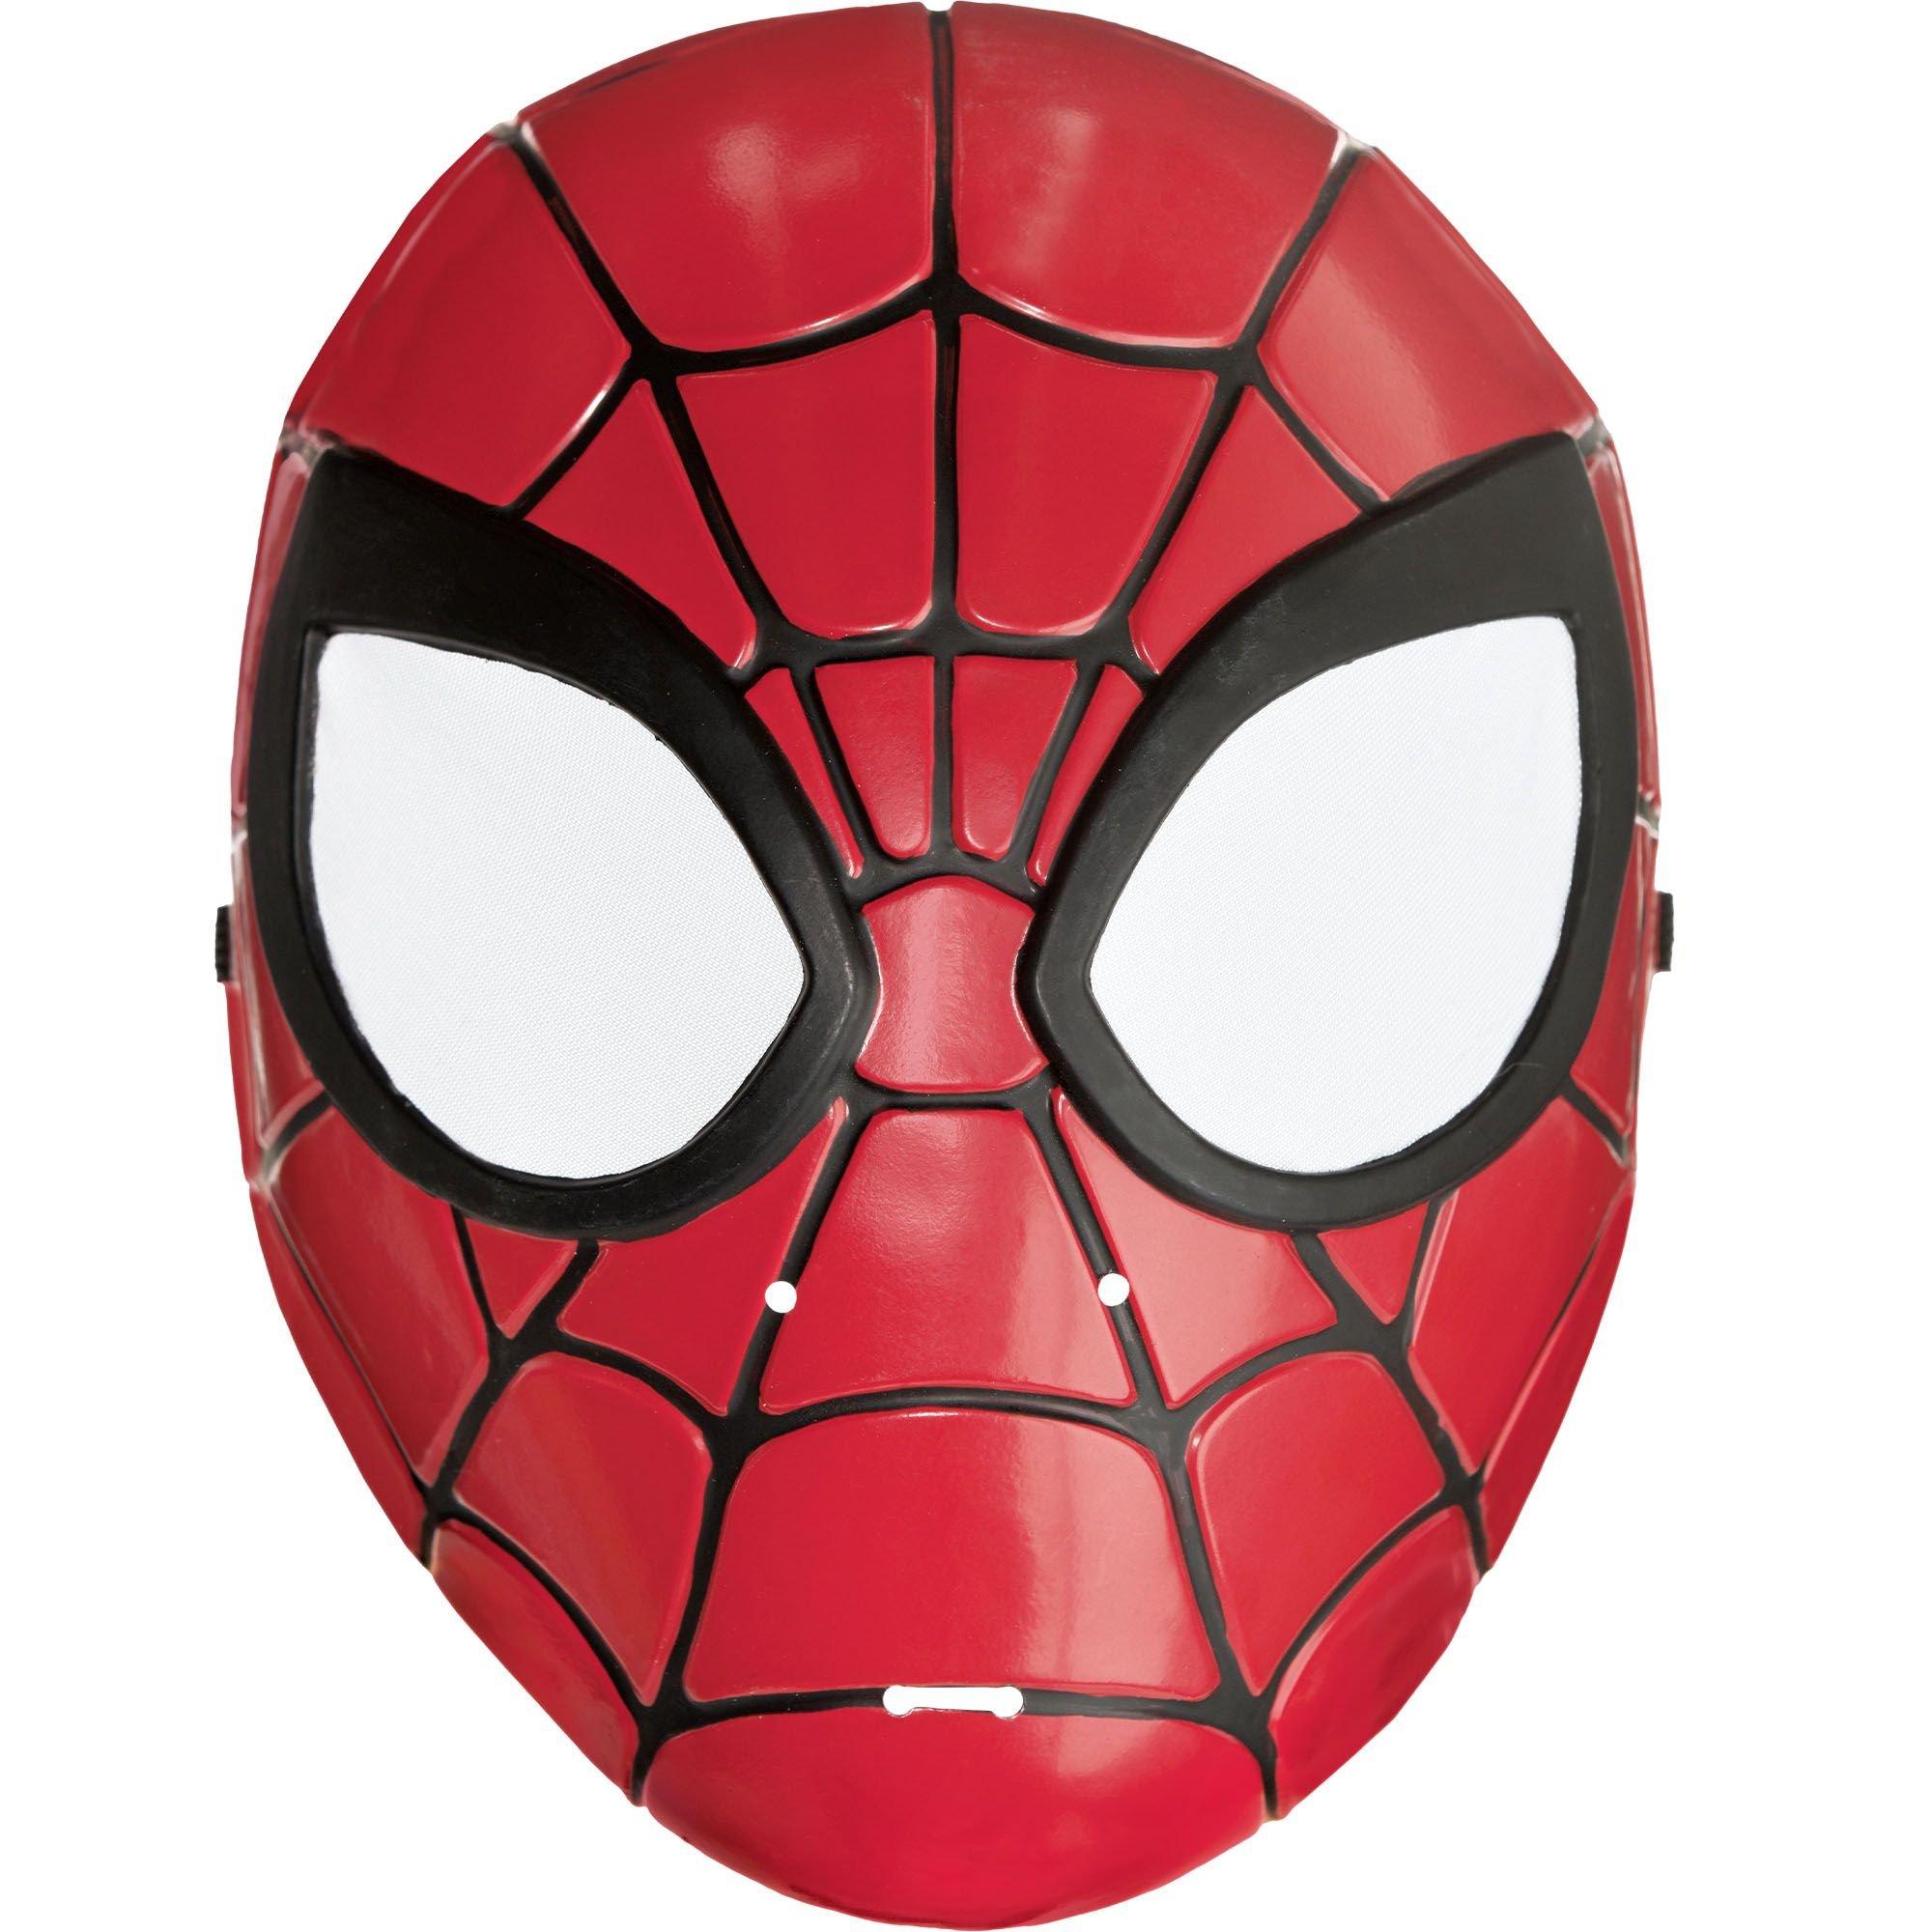 Spider-Man plastic mask for children 